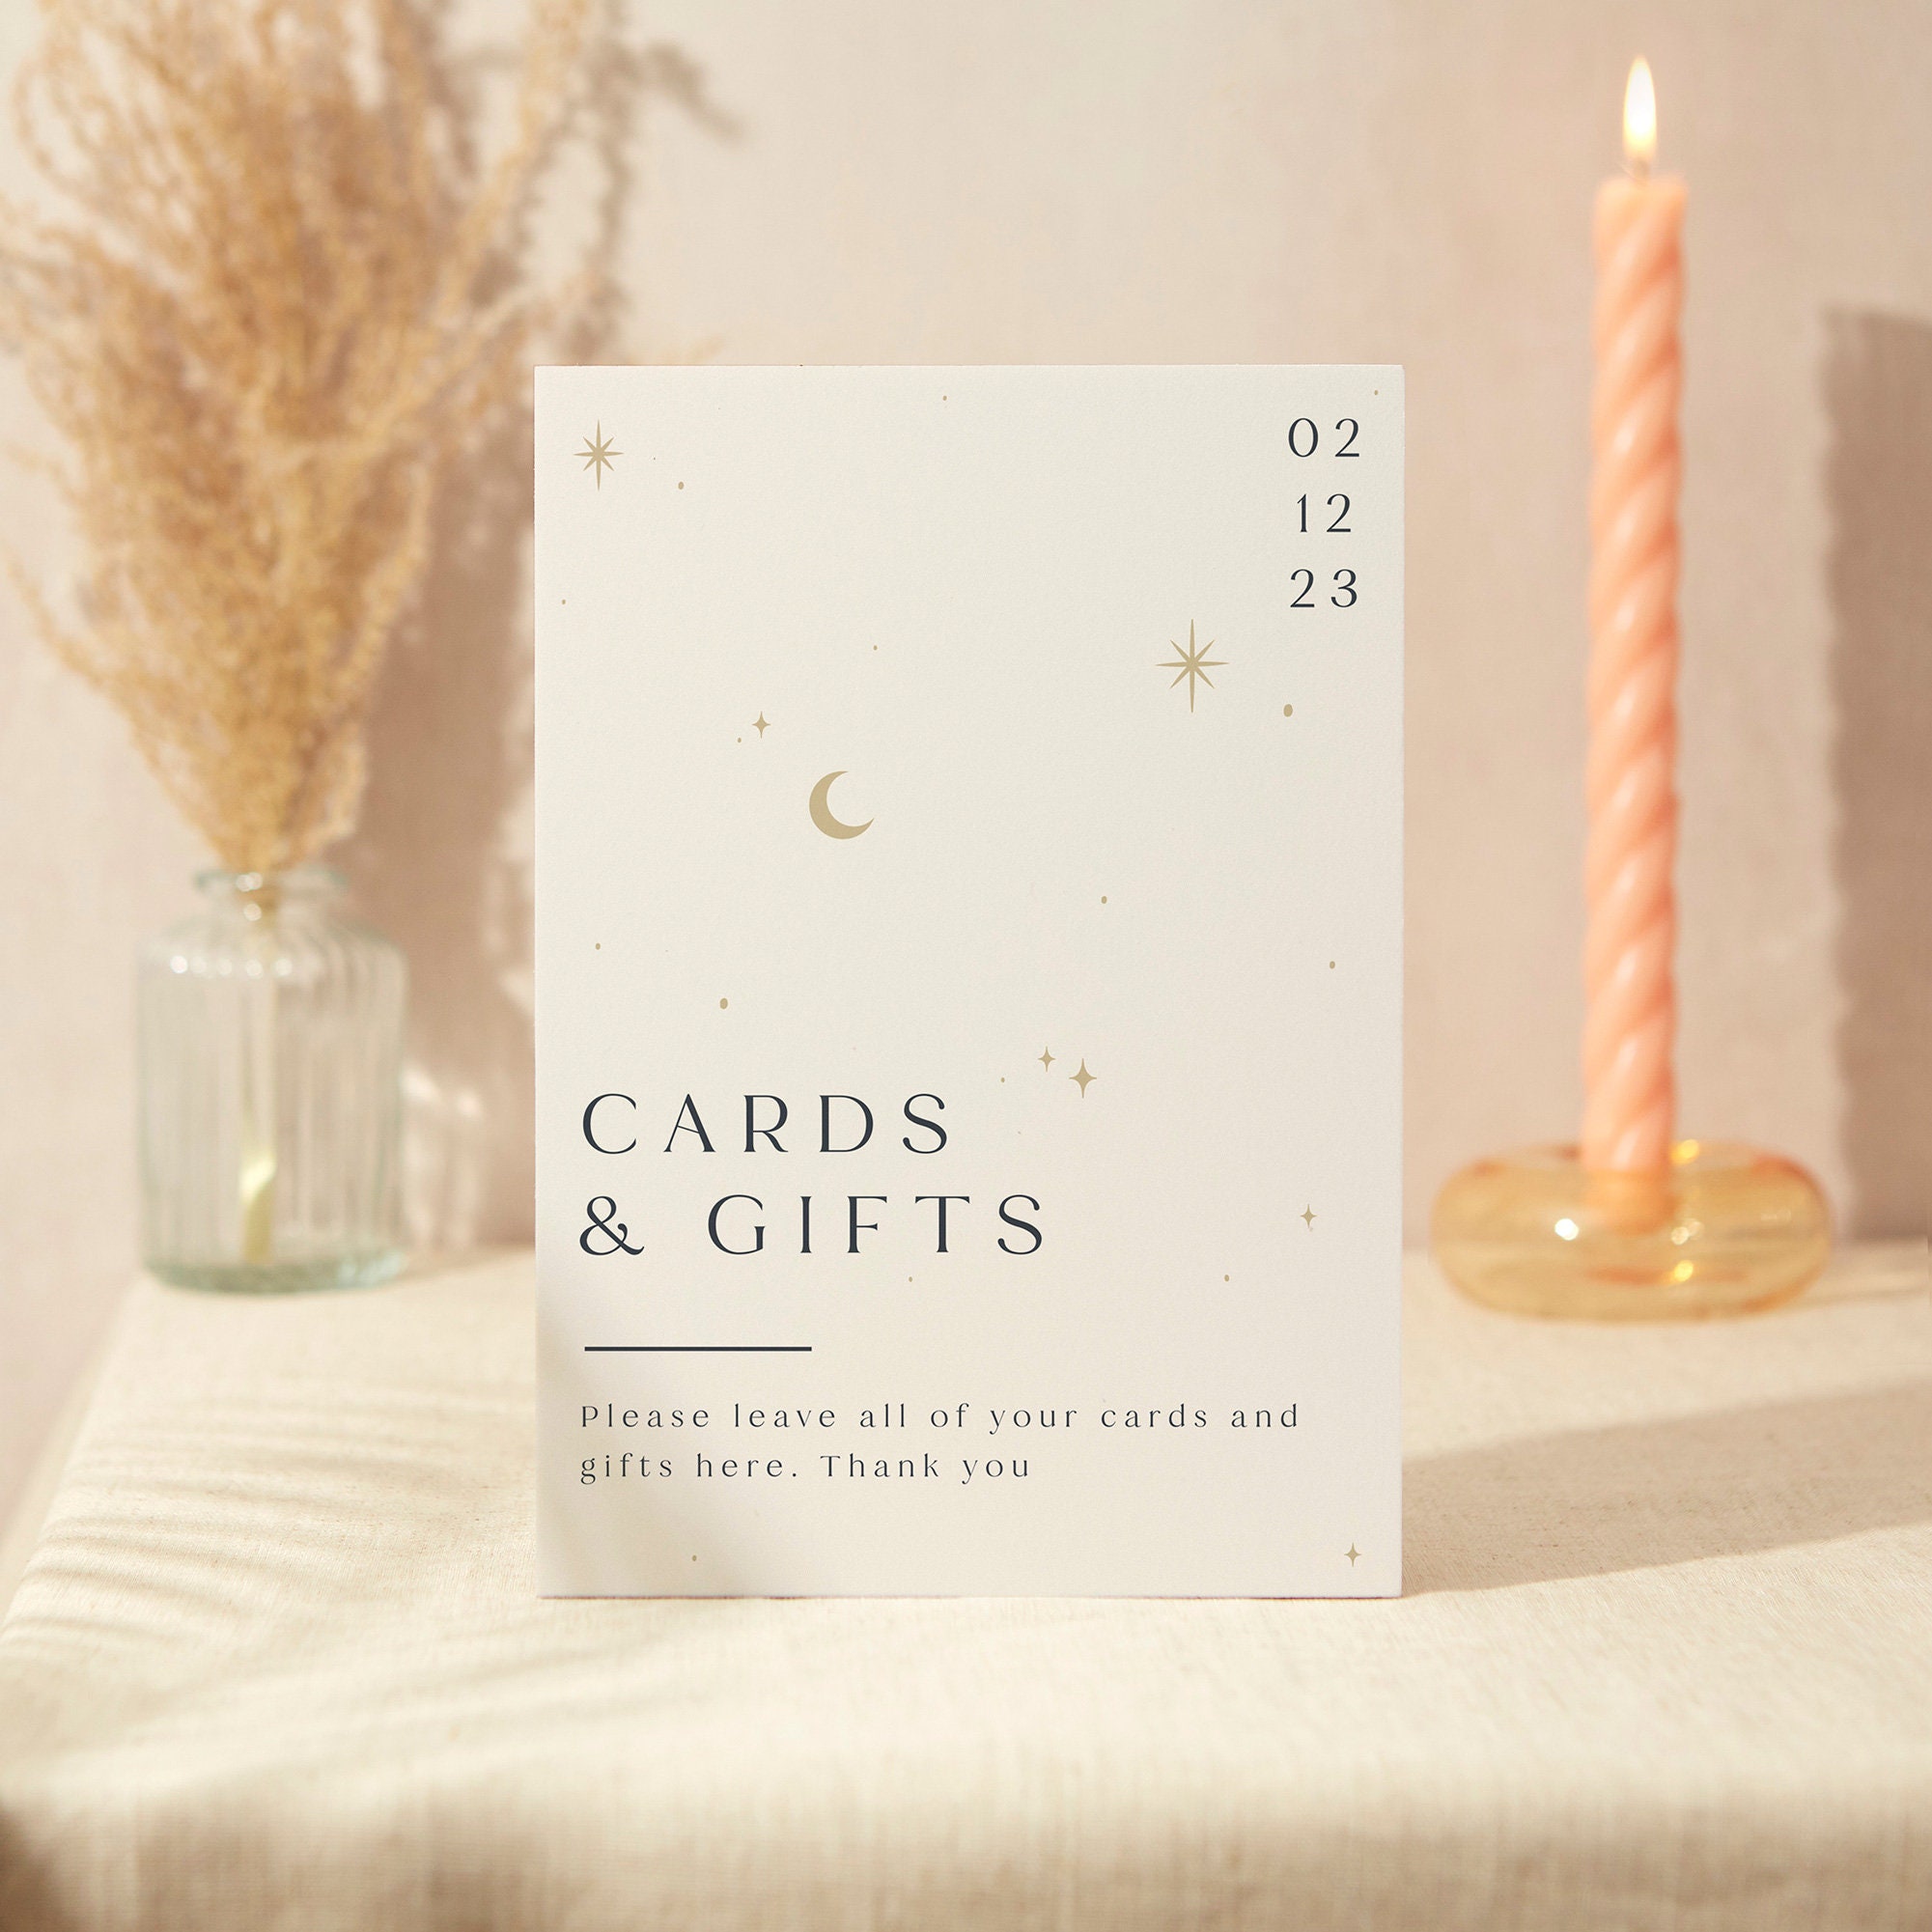 Cards & Gifts Sign | Wedding A4 Sturdy Foamex Celestial Night Sky